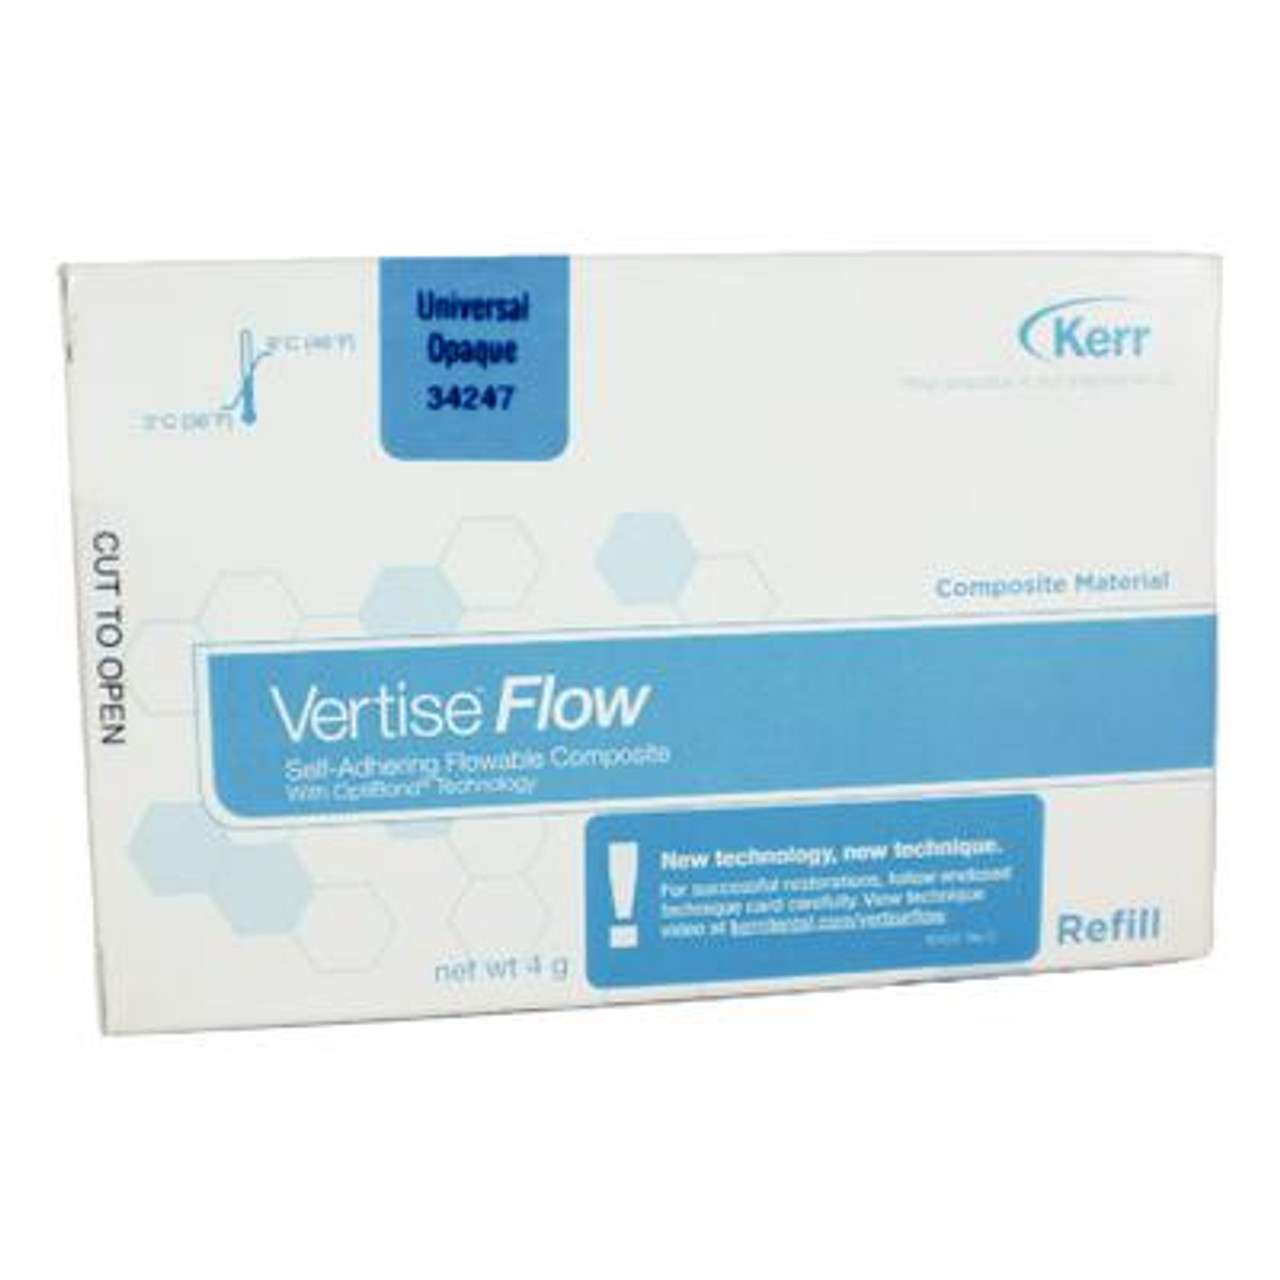 Kerr Vertise Flow Refills Syringe(2g ea) Universal Opaque, 2/pk